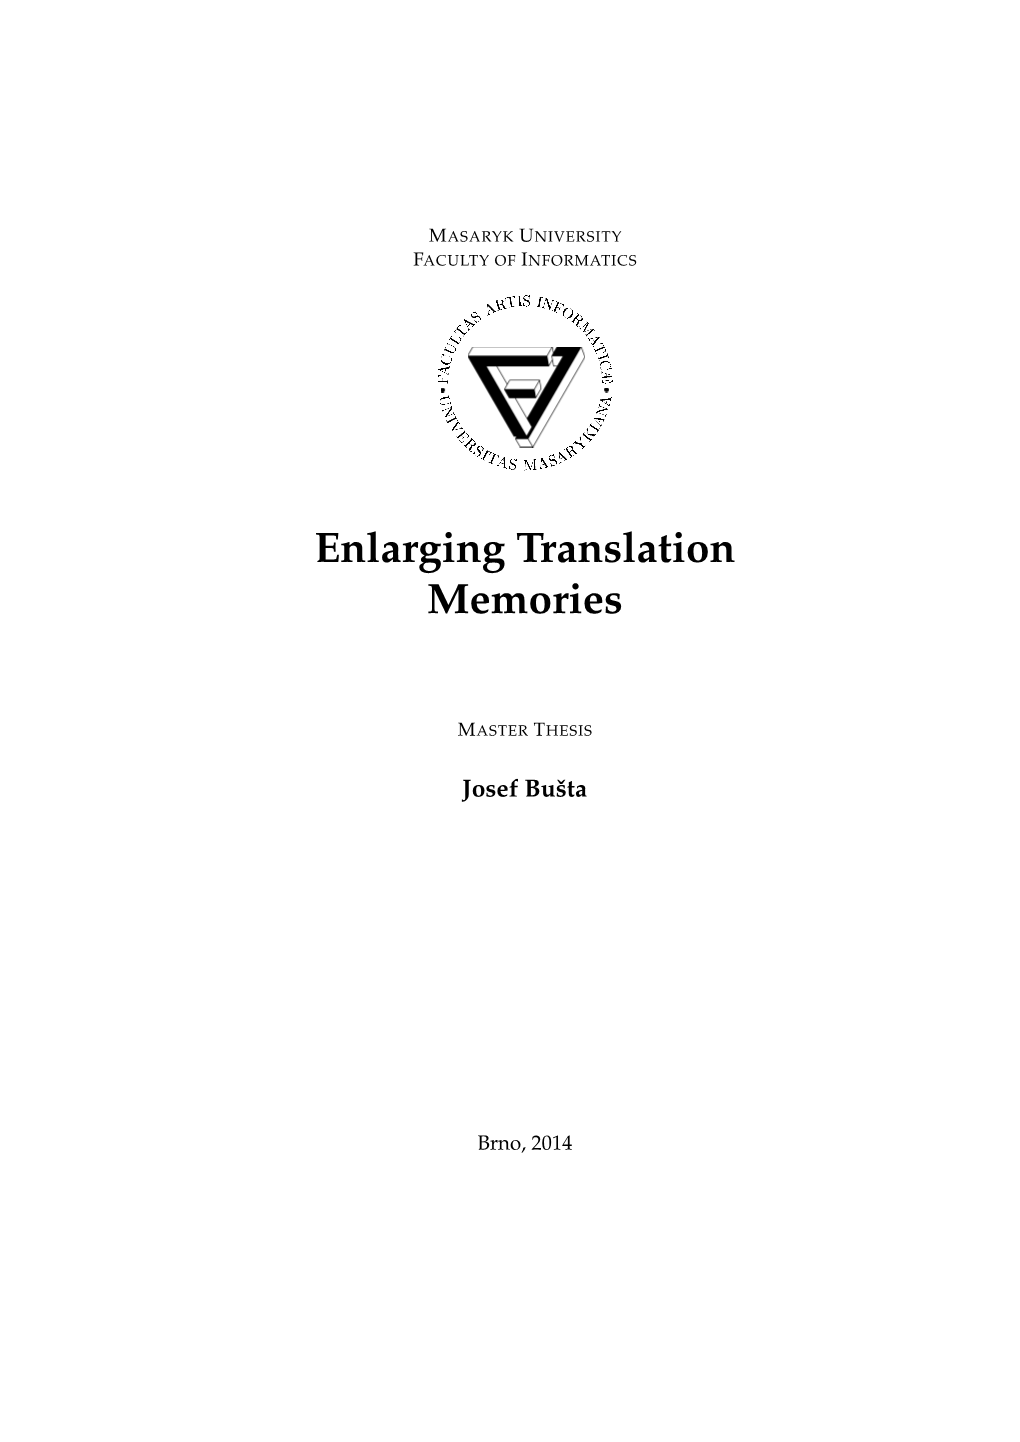 Enlarging Translation Memories